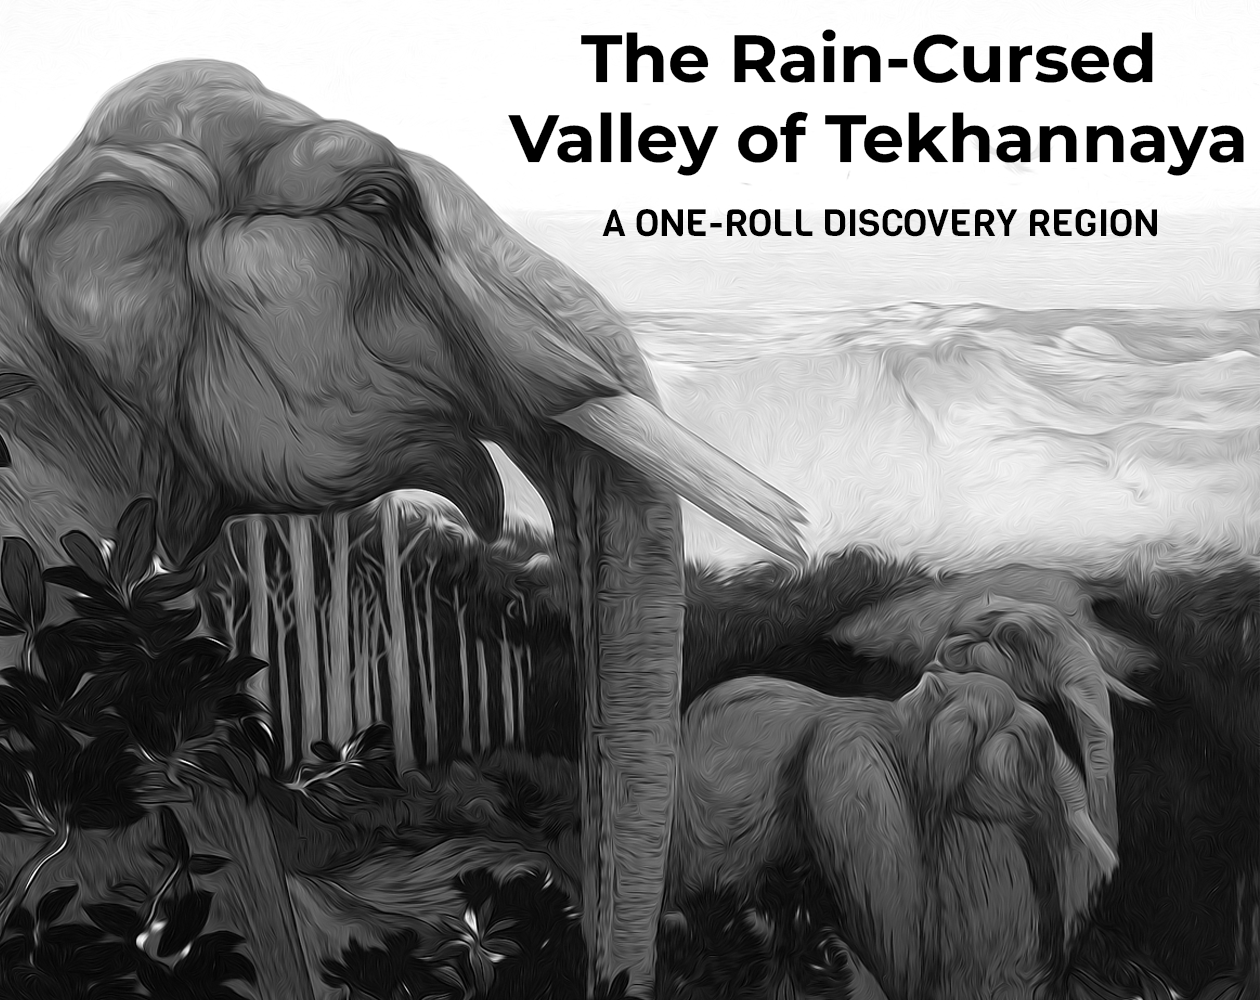 The Rain-Cursed Valley of Tekhannaya